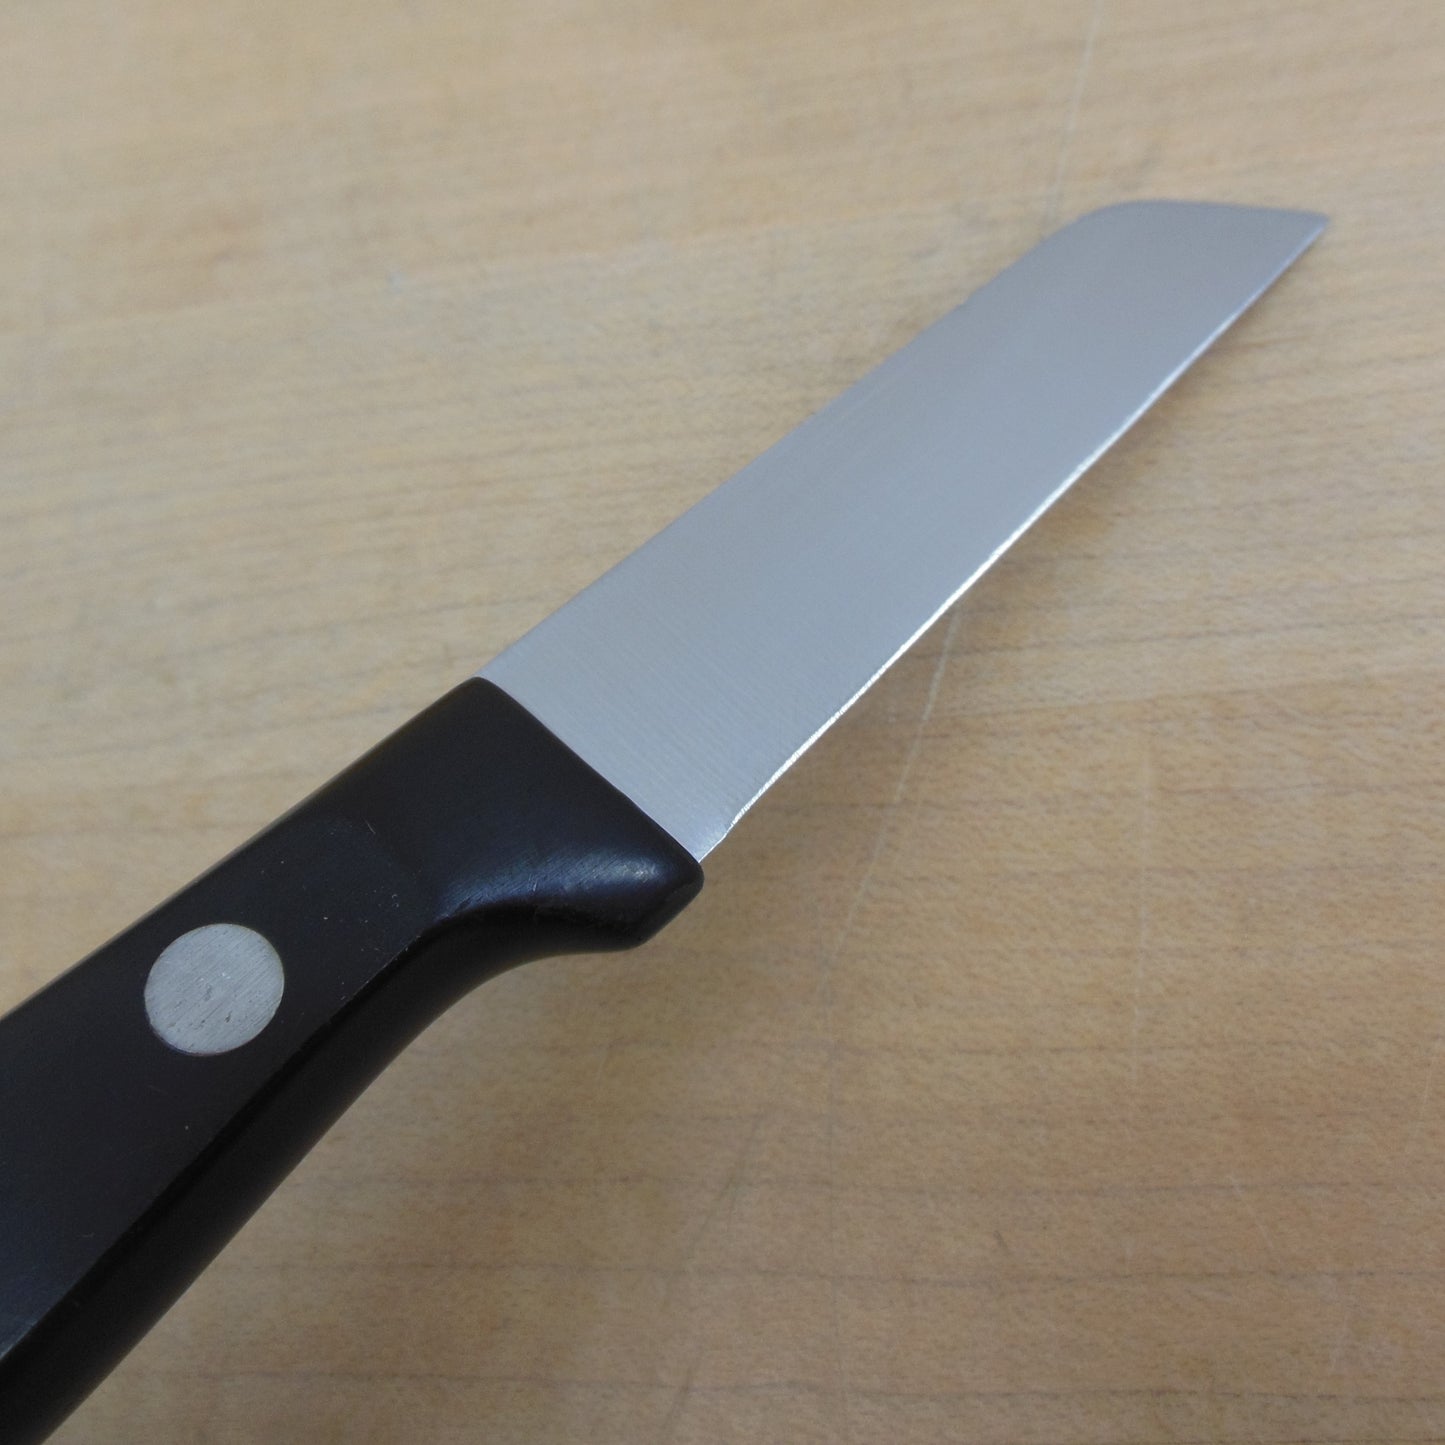 Wusthof Germany Gourmet Stainless Paring Knife 4010/7cm used